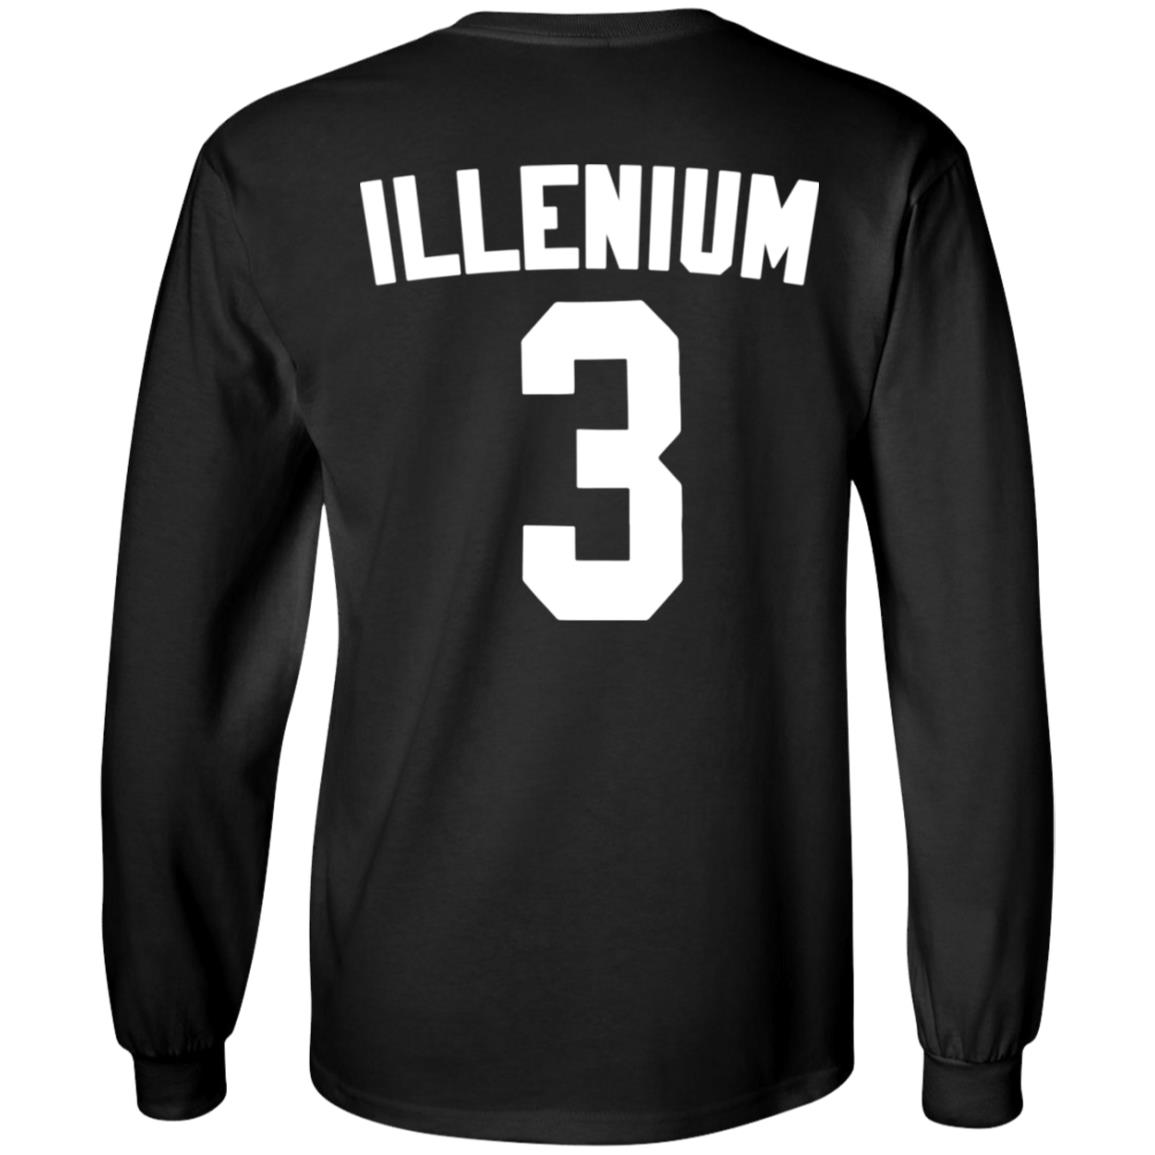 LTD Black Illenium Jersey